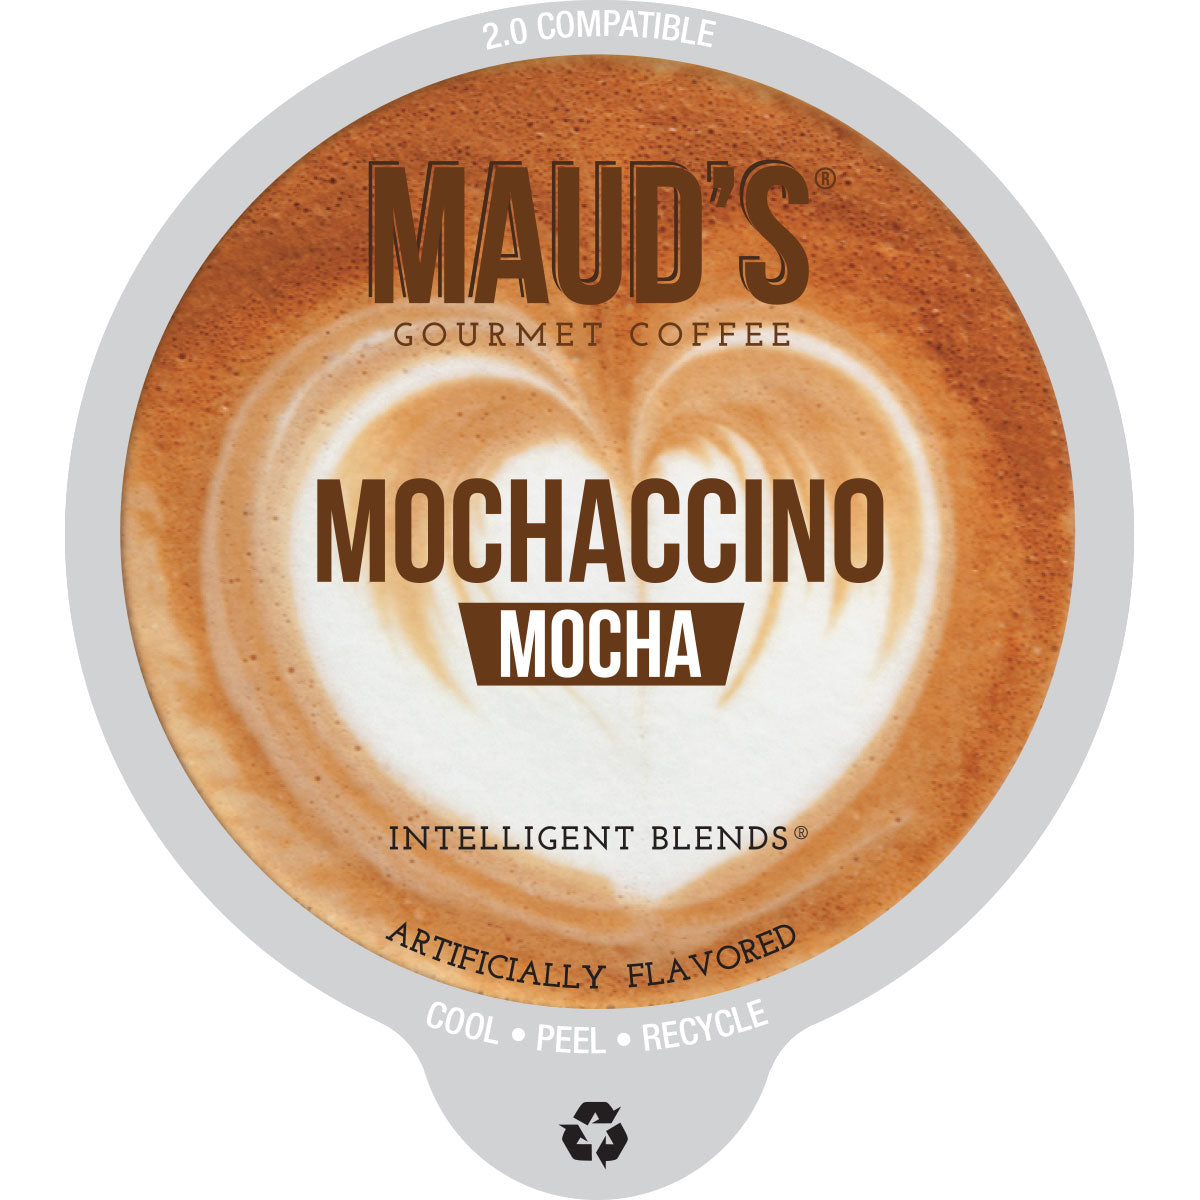 Maud's Chocolate Mocha Cappuccino Coffee Pods - 100ct